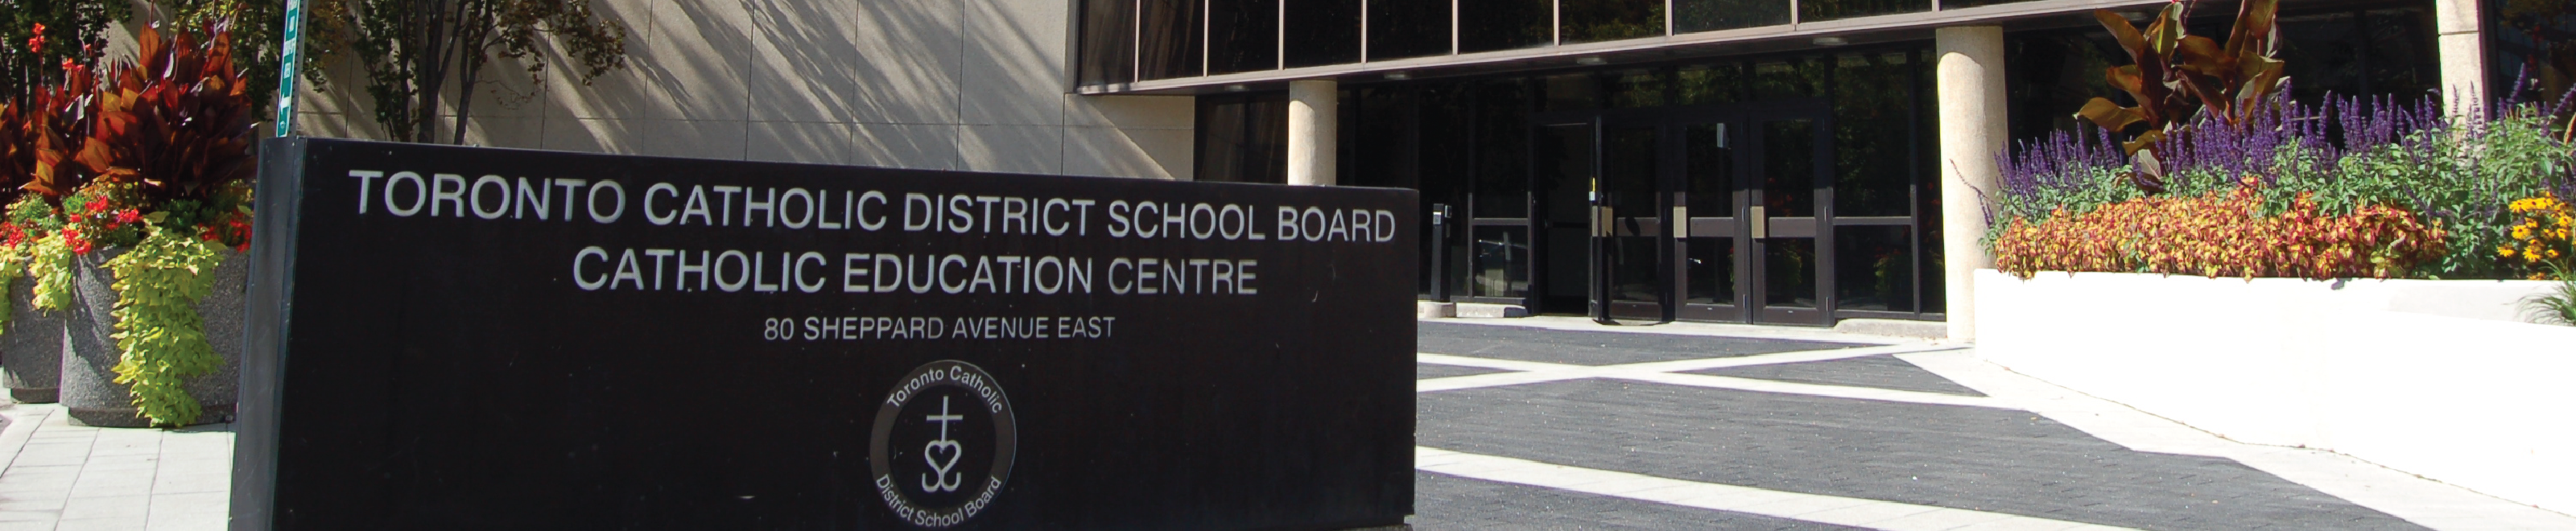 Toronto Catholic District School Board main office building entrance.